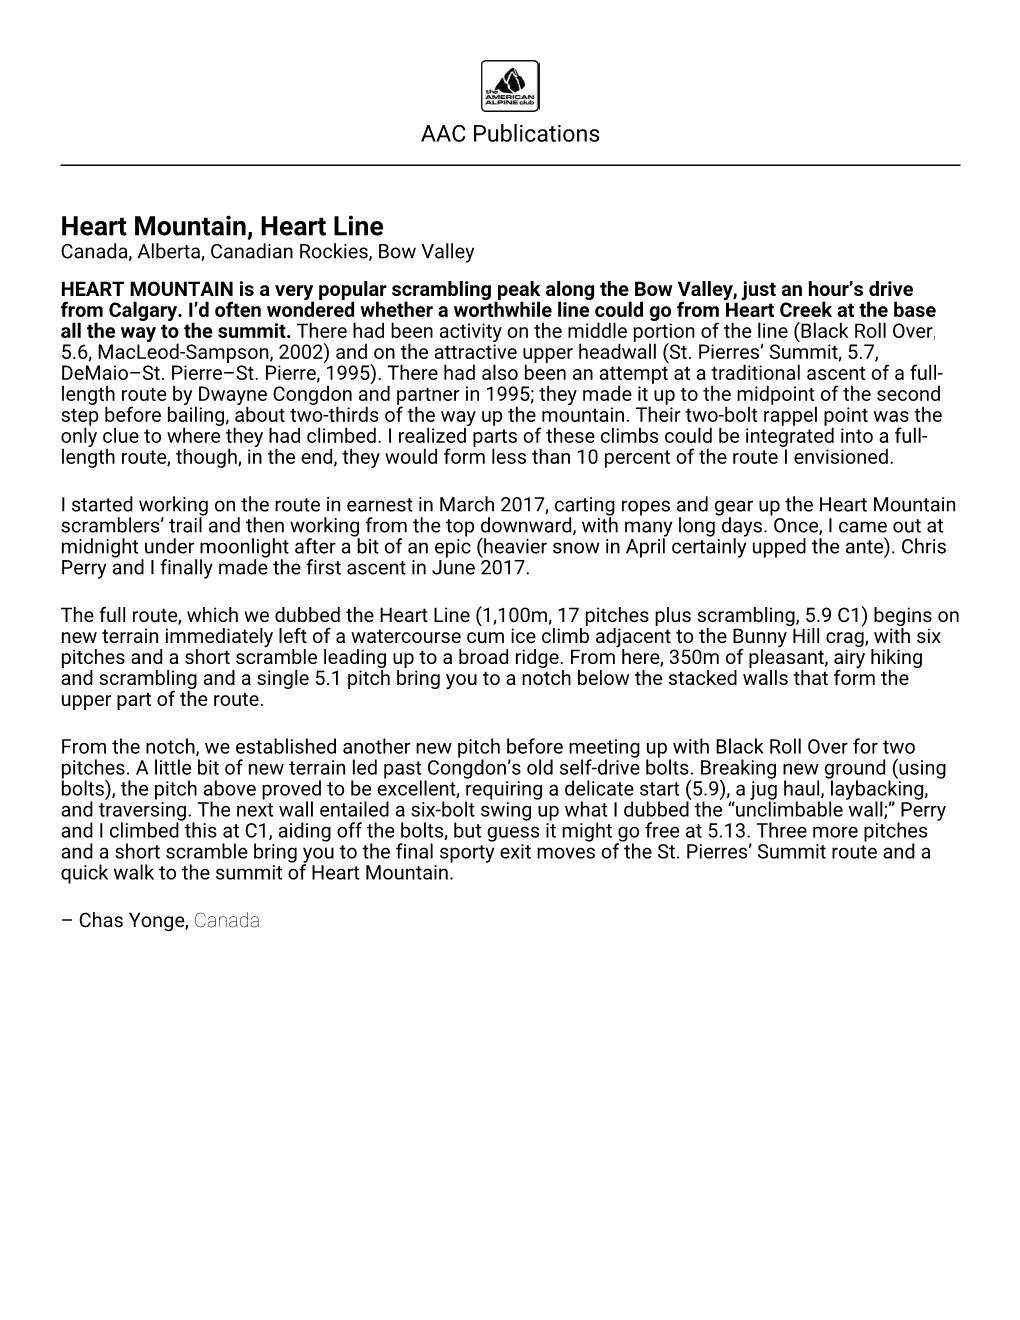 Heart Mountain, Heart Line